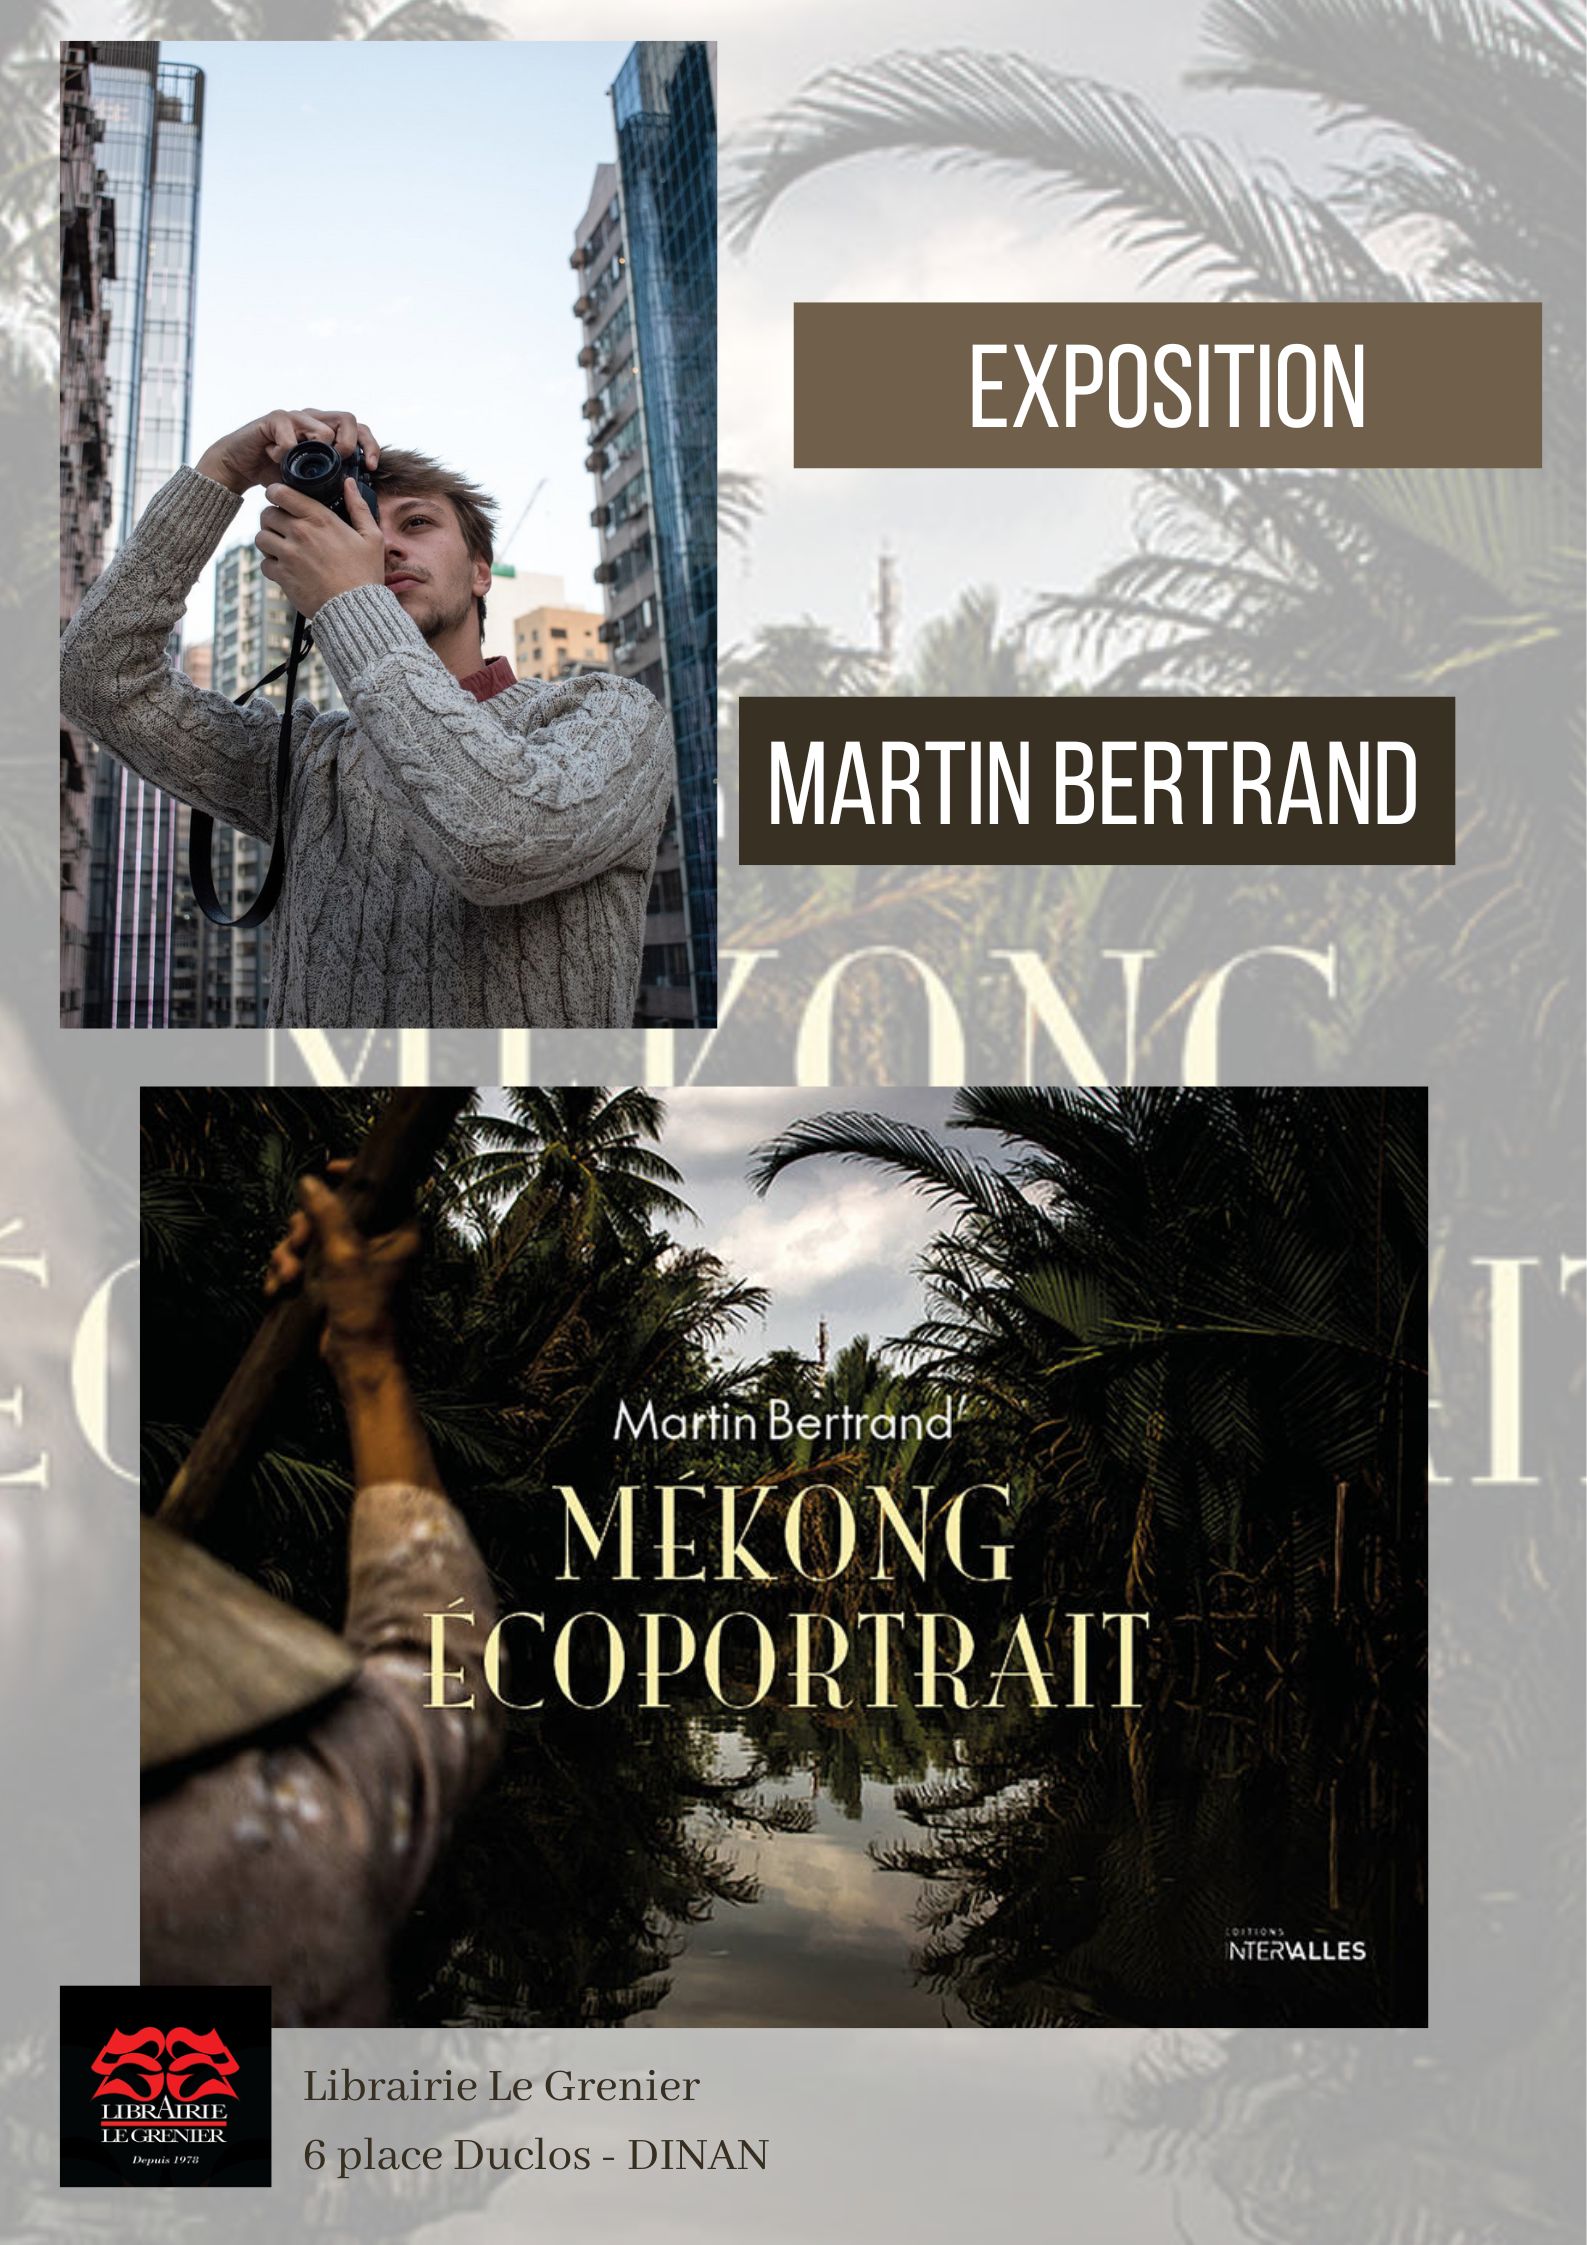 Martin BERTRAND / EXPOSITION